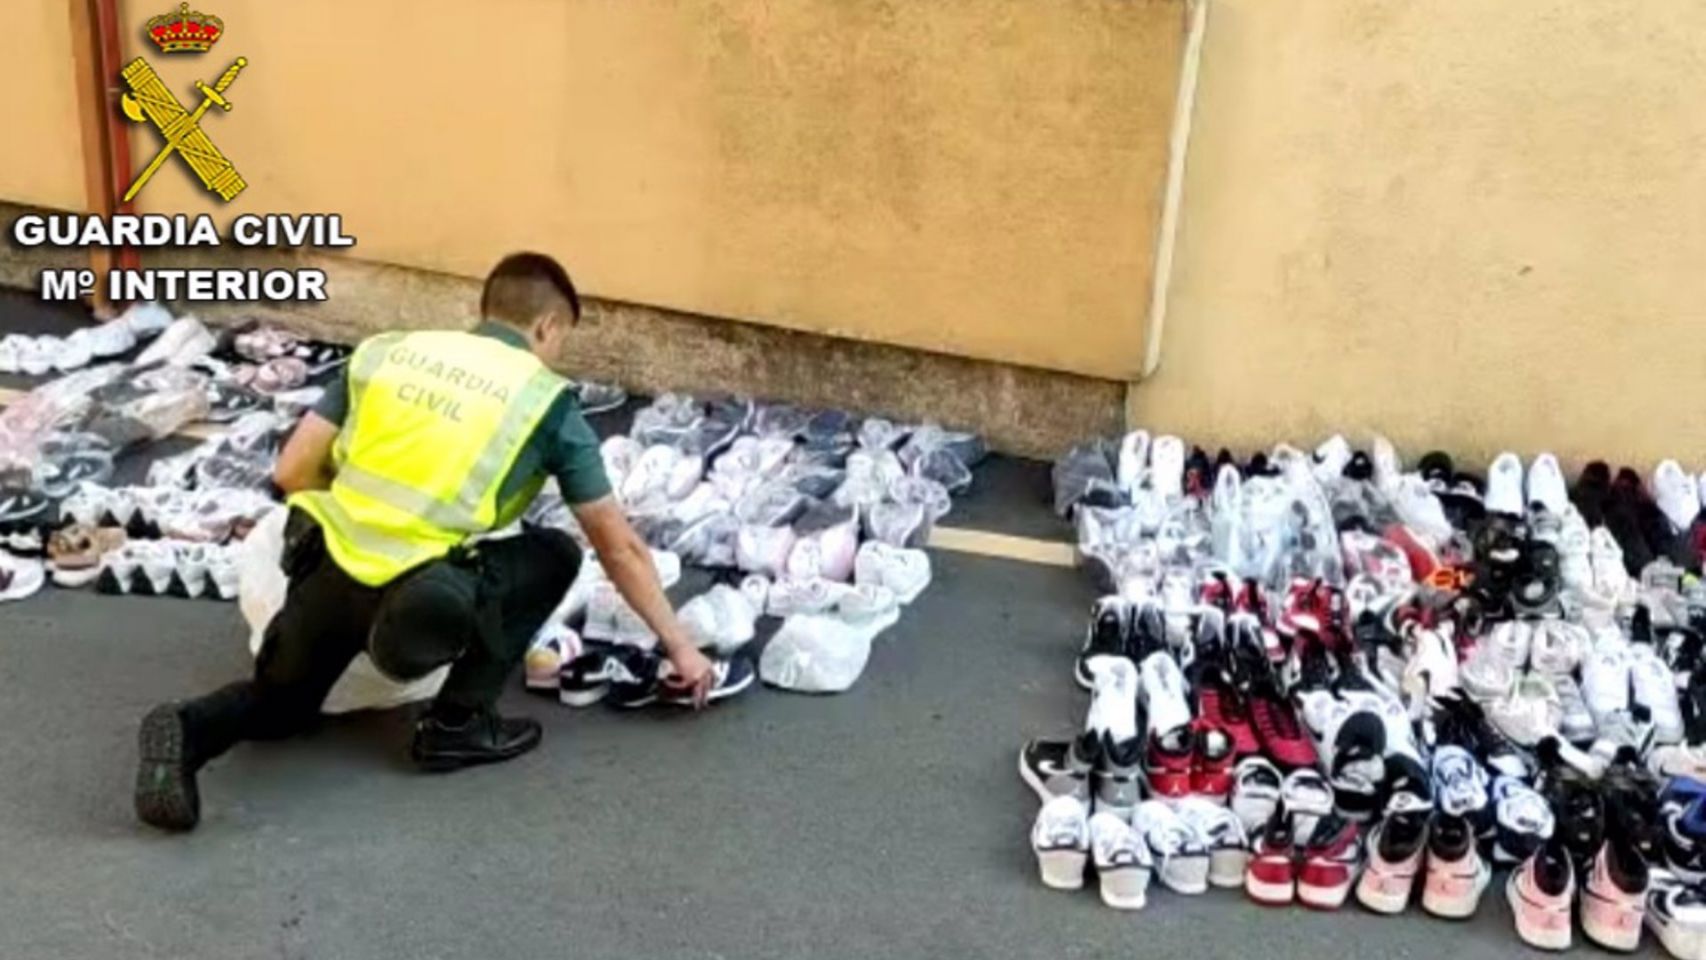 Zapatillas deportivas falsificadas intervenidas por la Guardia Civil.